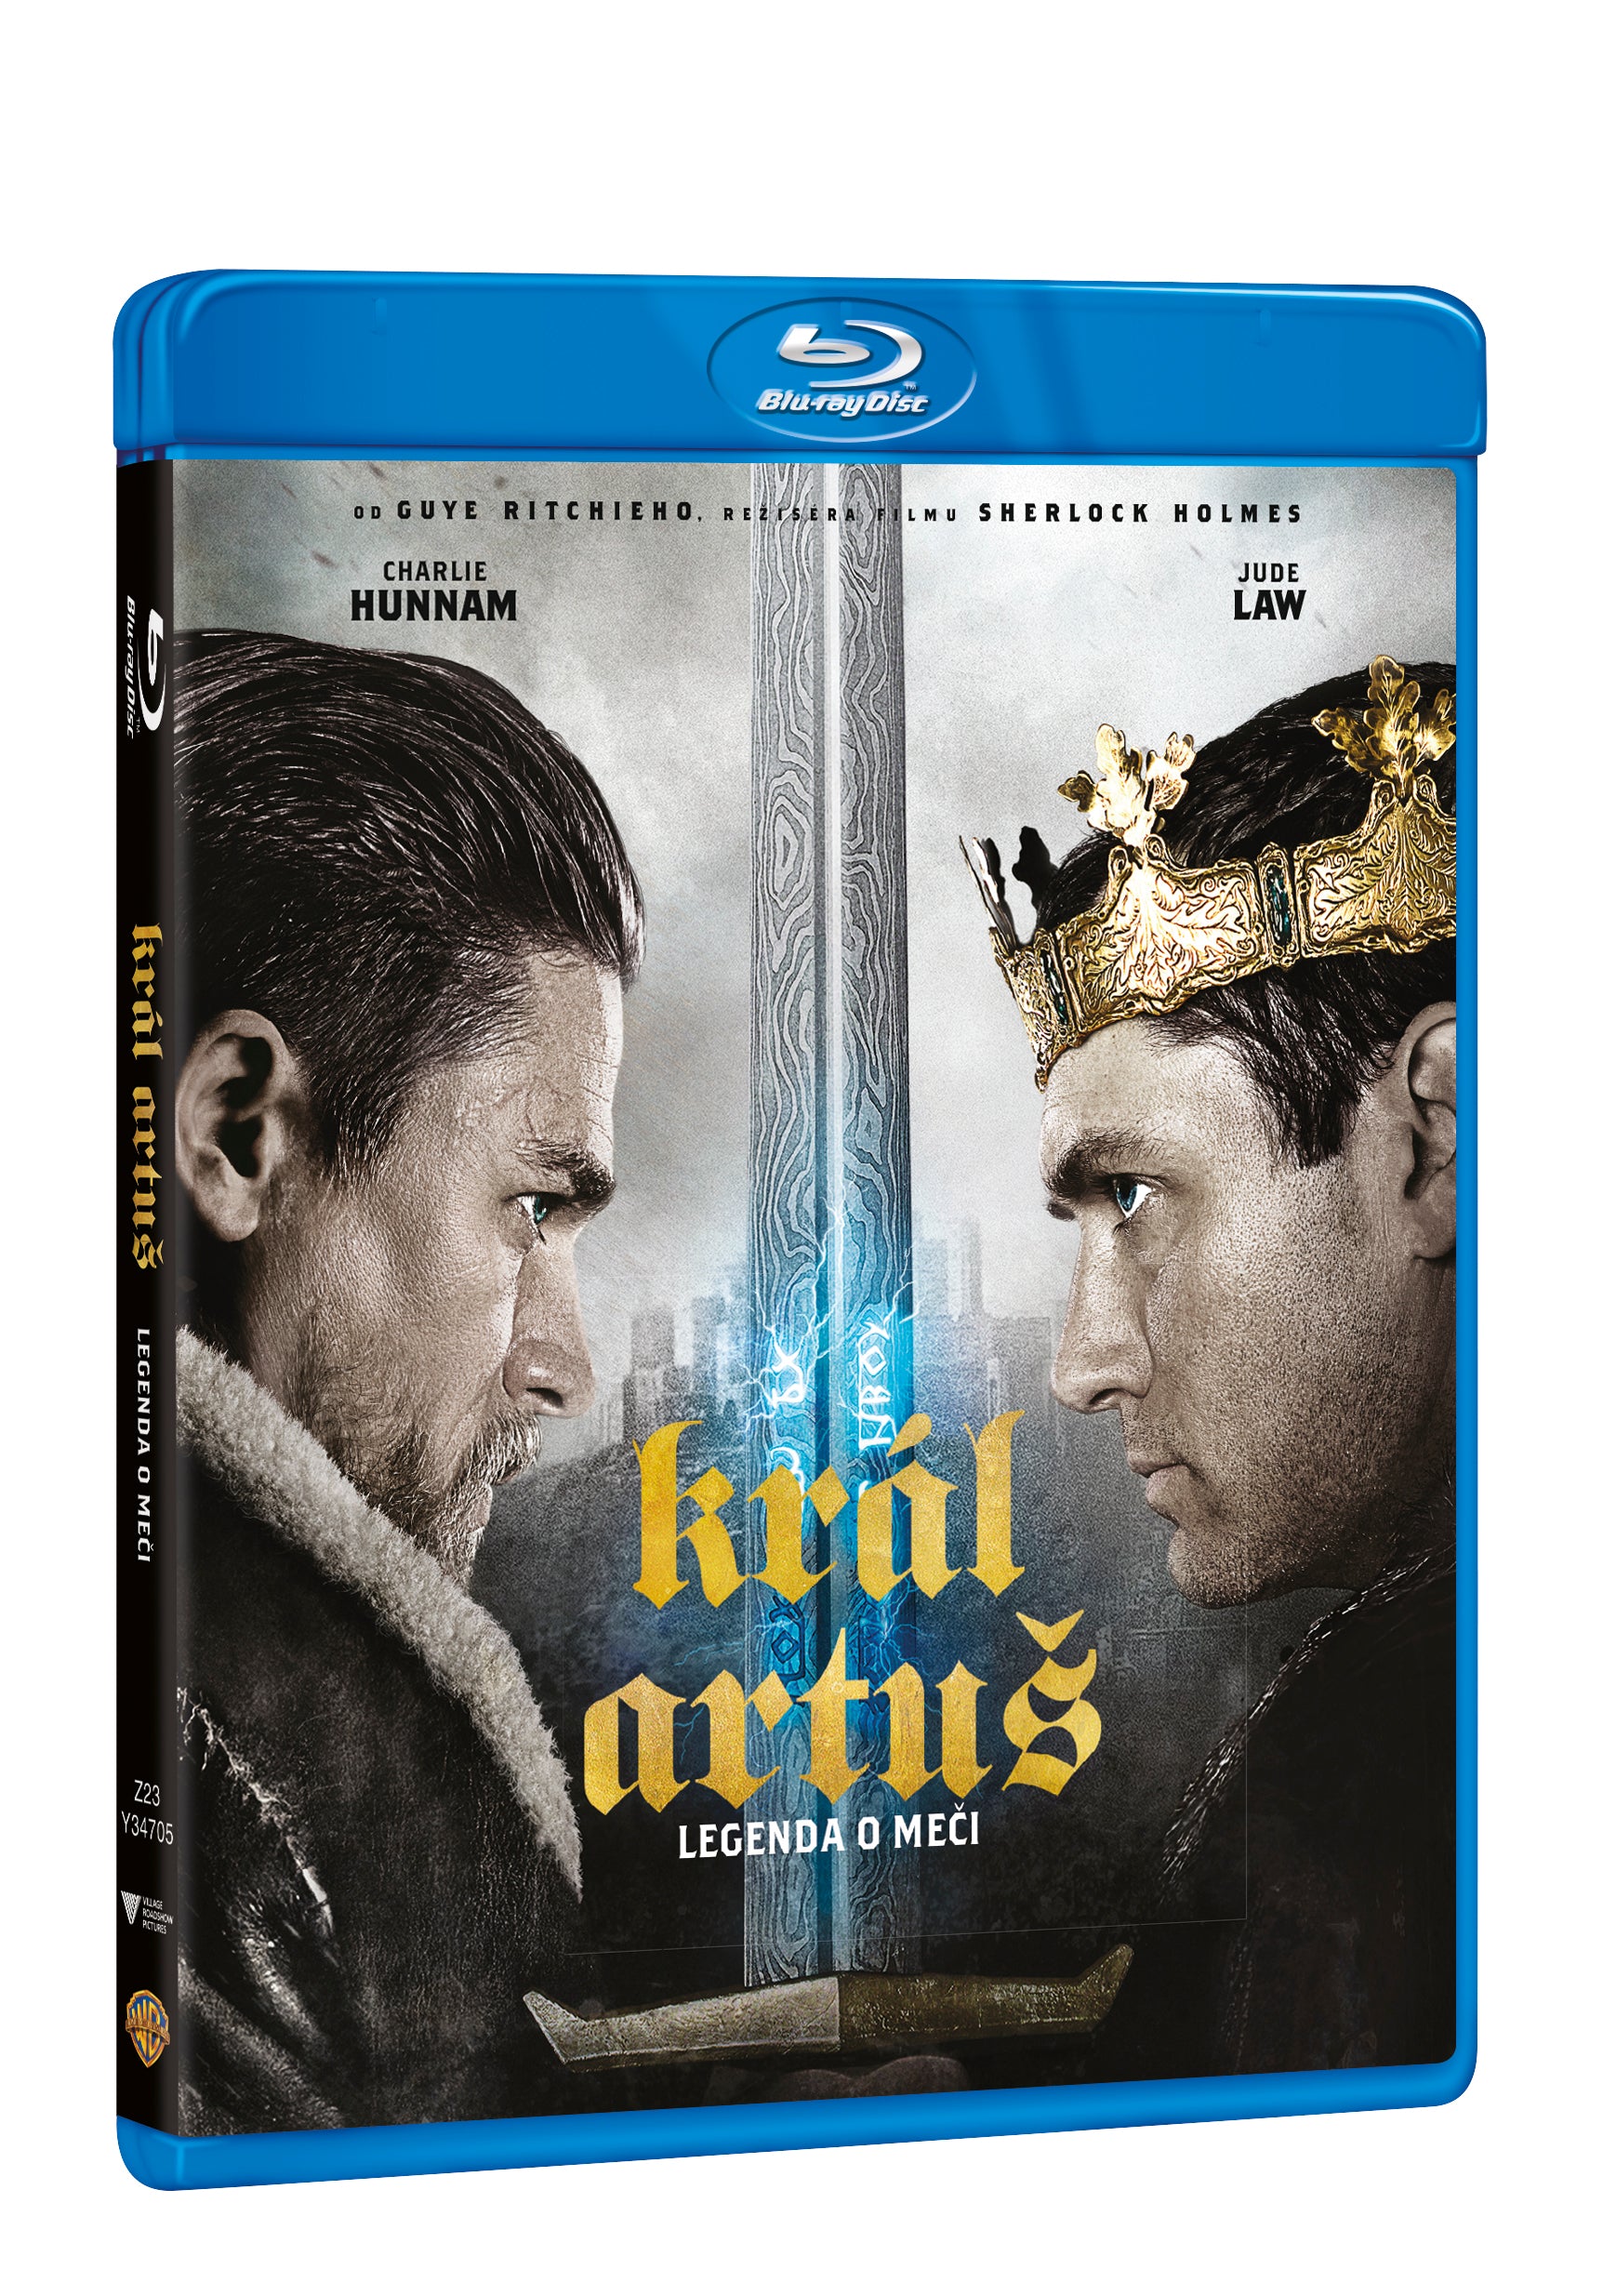 Kral Artus: Legenda o meci BD / King Arthur: Legend of the Sword - Czech version